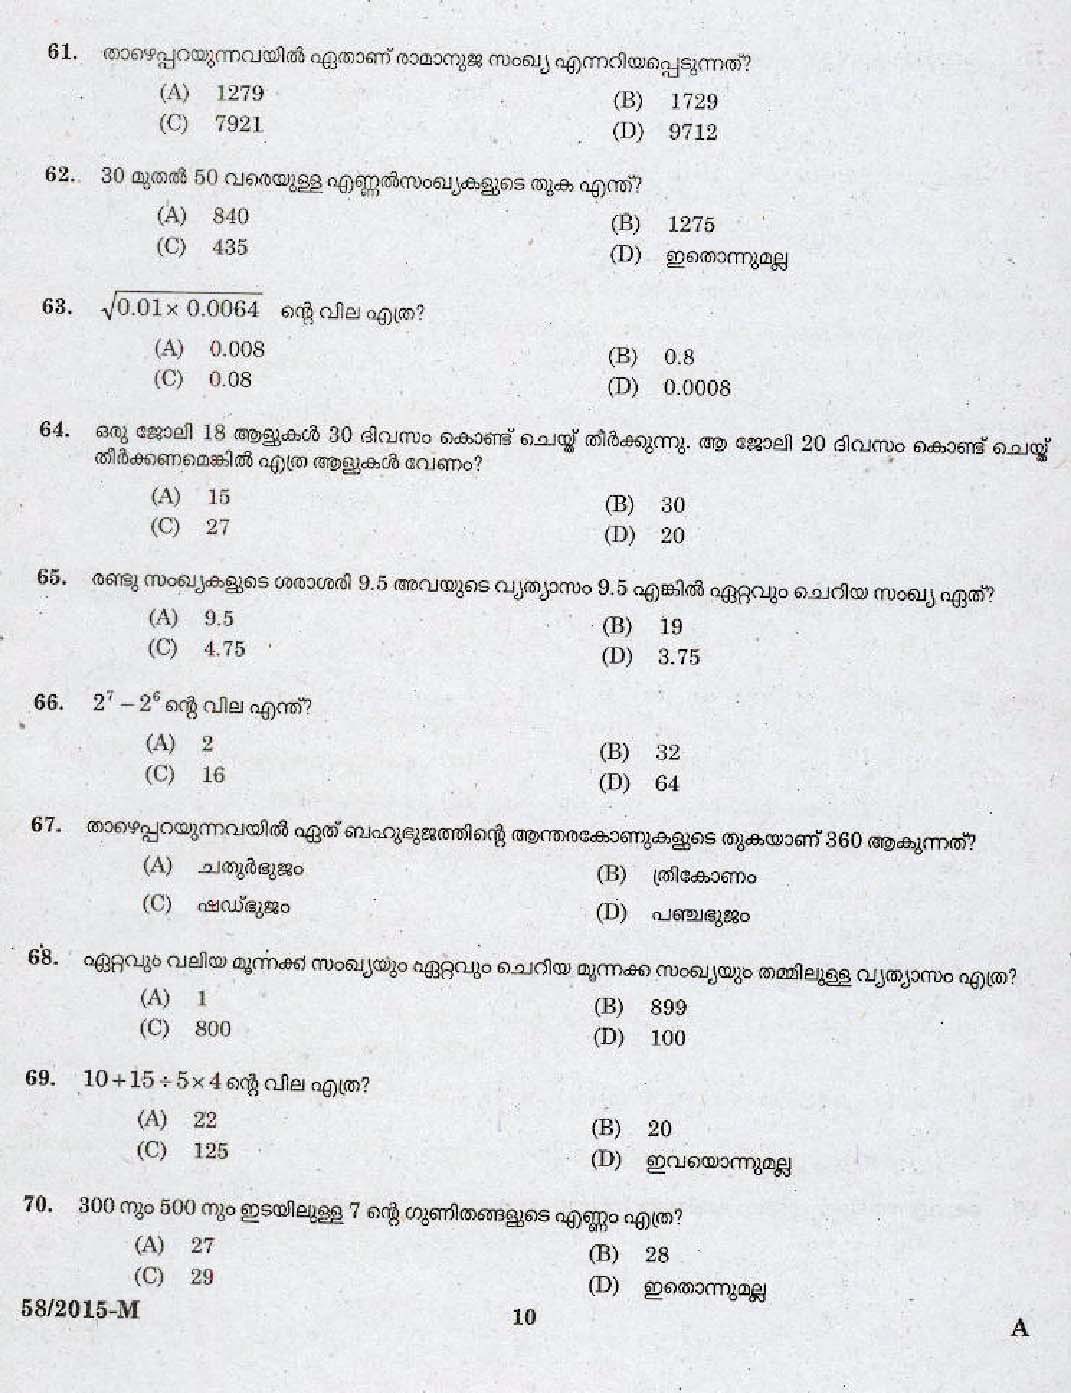 Kerala PSC Attender Exam 2015 Question Paper Code 582015 M 8